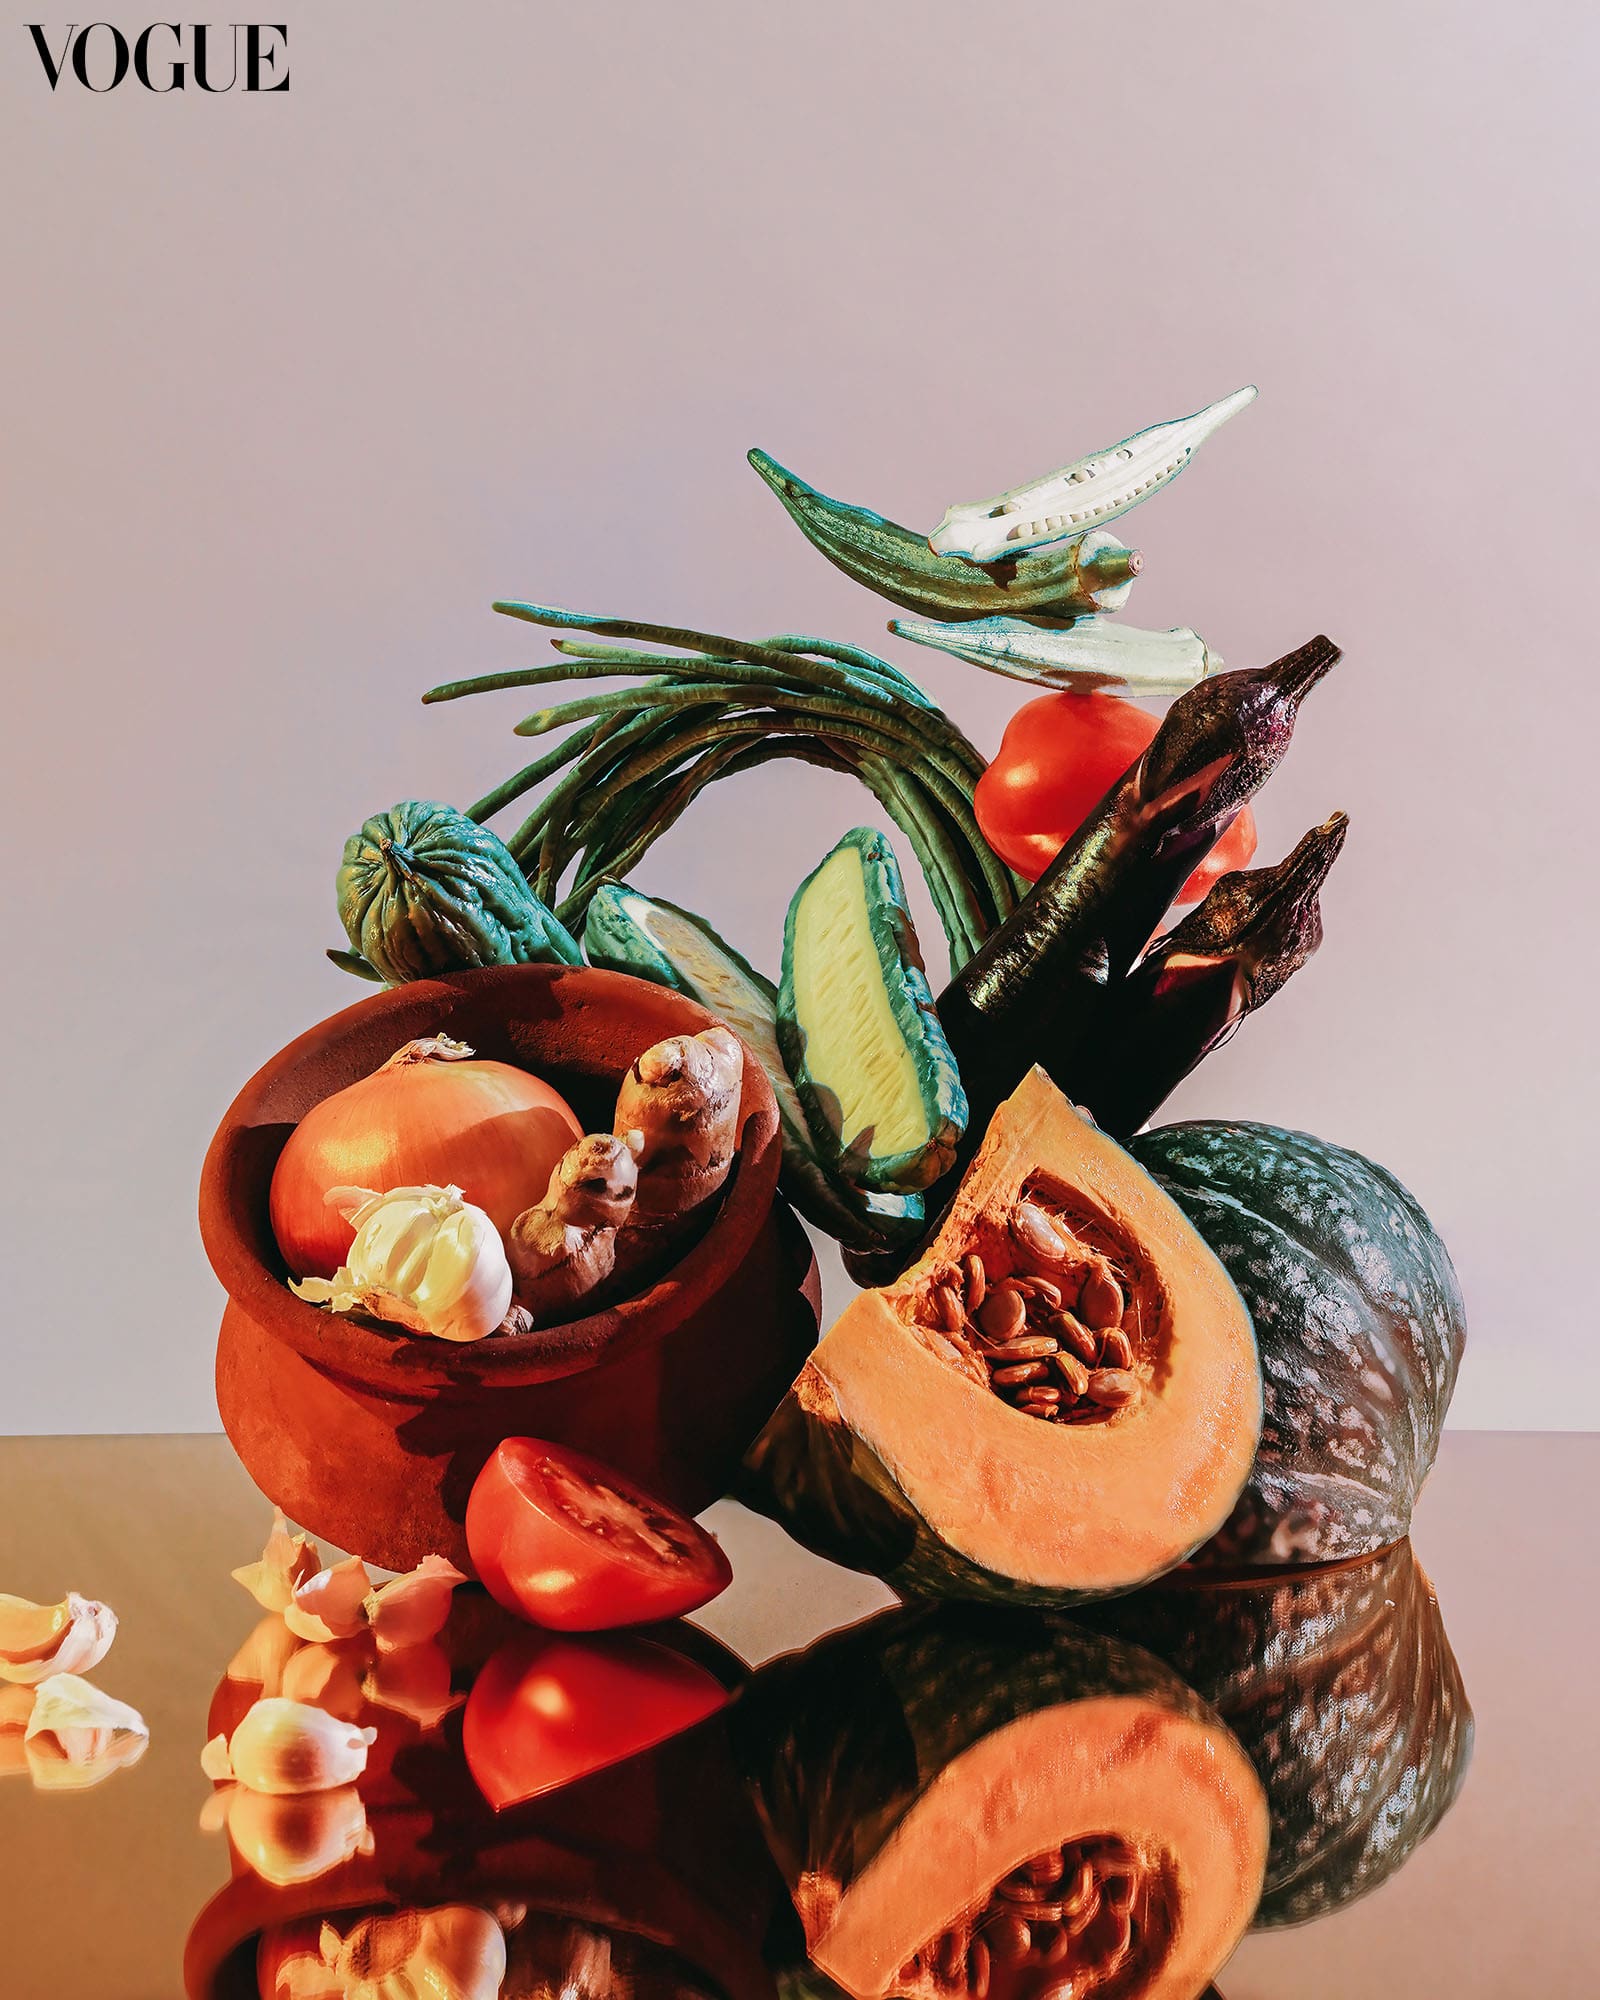 Edible arrangement photographed by Joshua Tolentino.